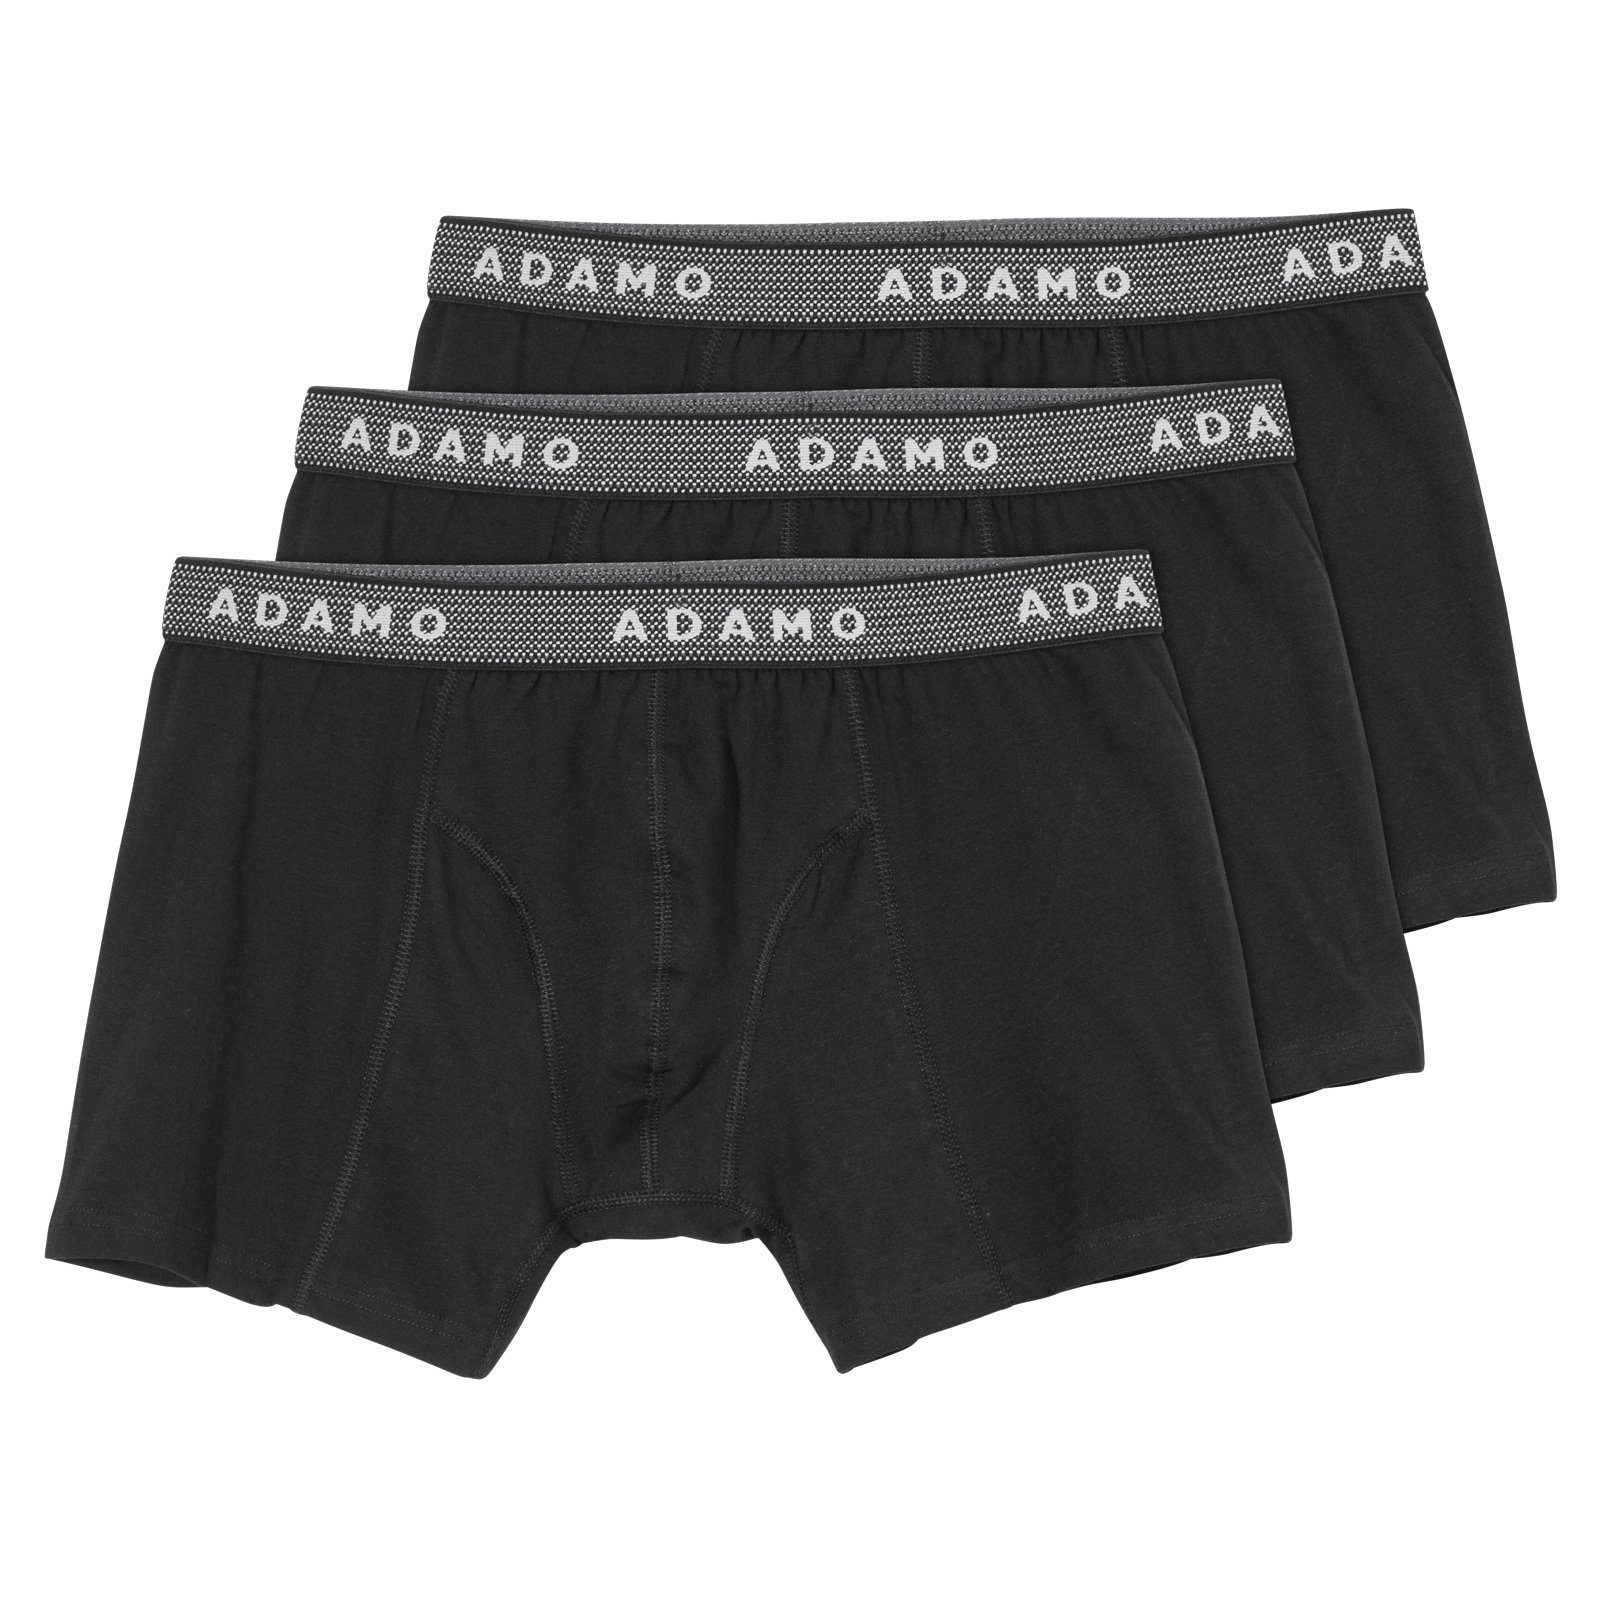 ADAMO Größen Pants schwarz 3er-Pack) Retro Große 3er Pack Adamo (Packung, 3-St., Fashion Maxipants